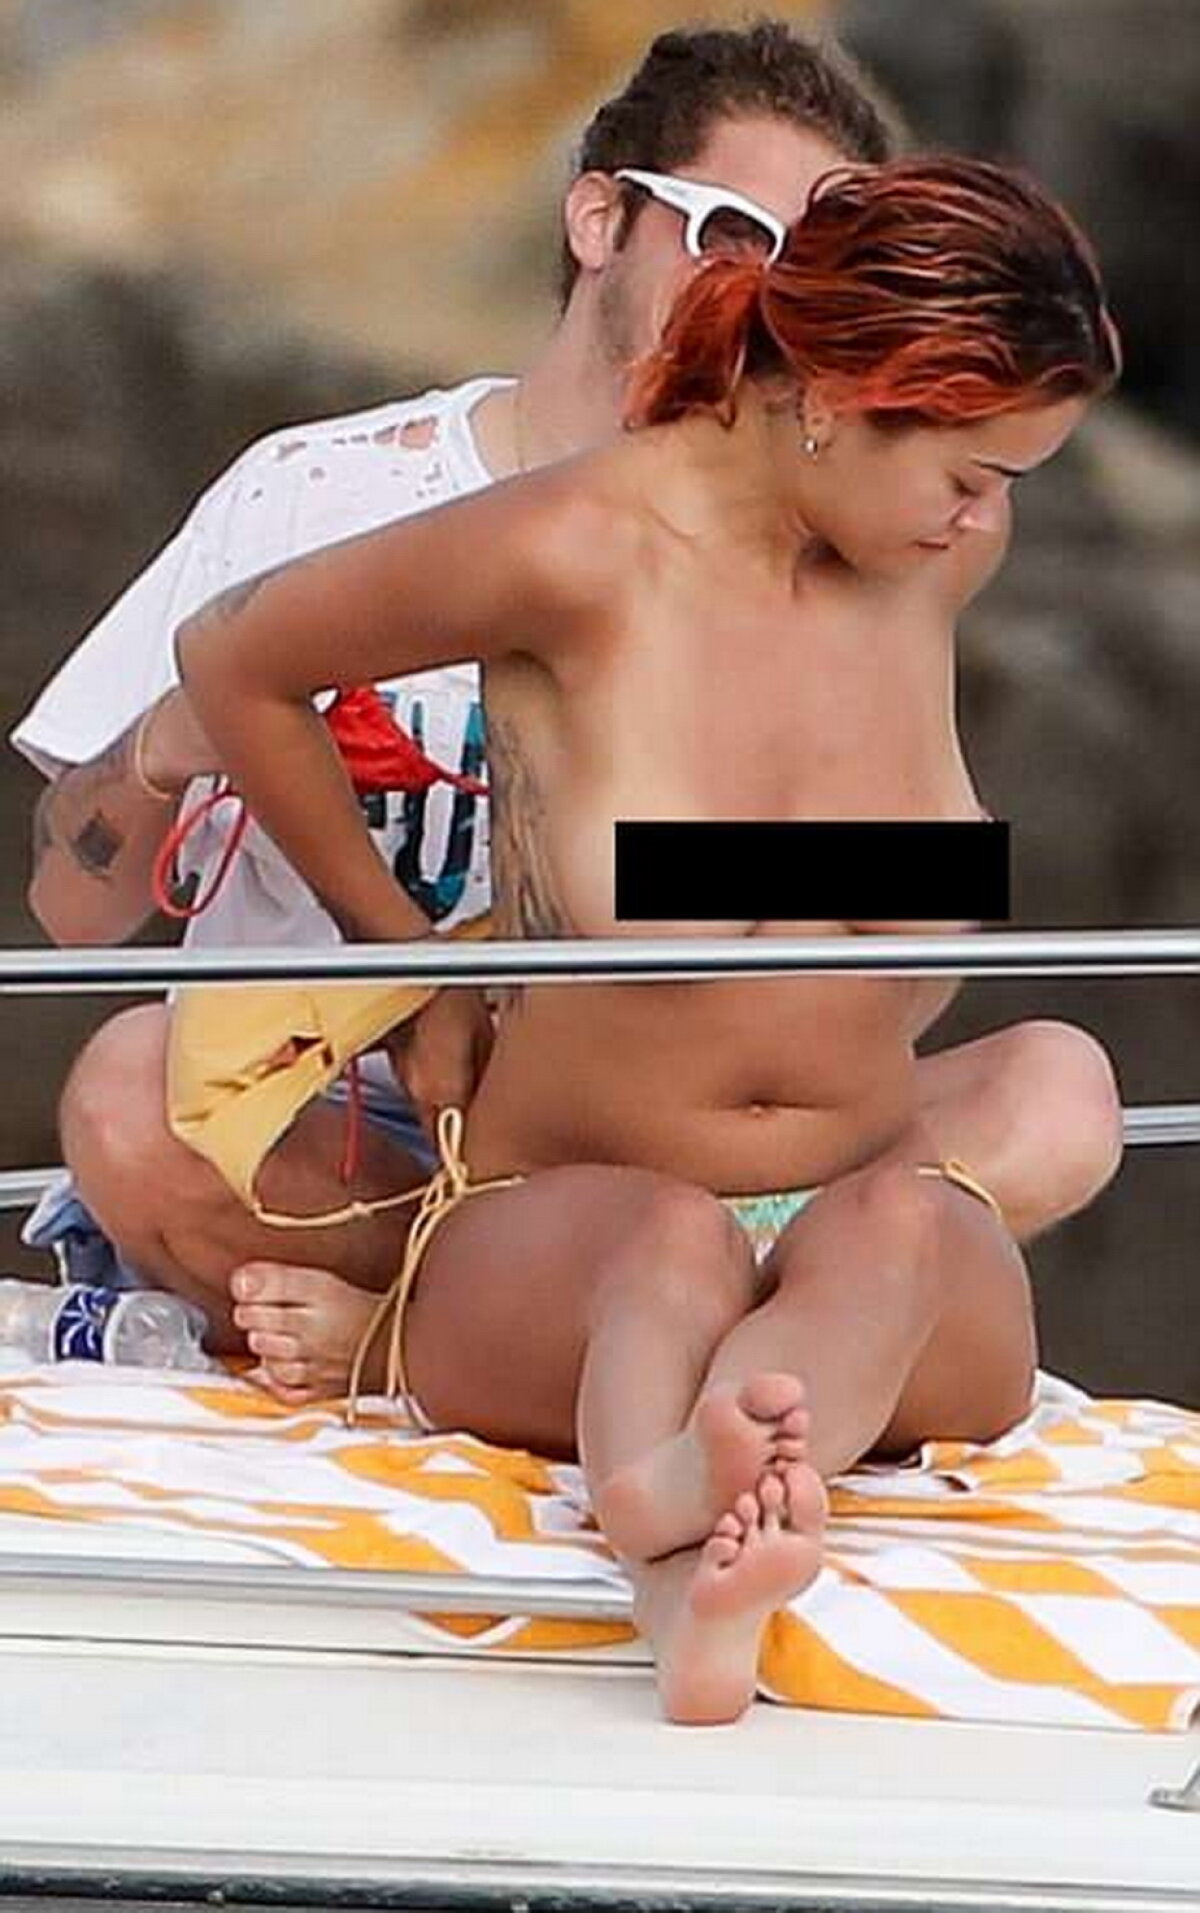 GALERIE FOTO Fotografii incendiare cu Rita Ora: paparazzi au surprins-o în sânii goi!